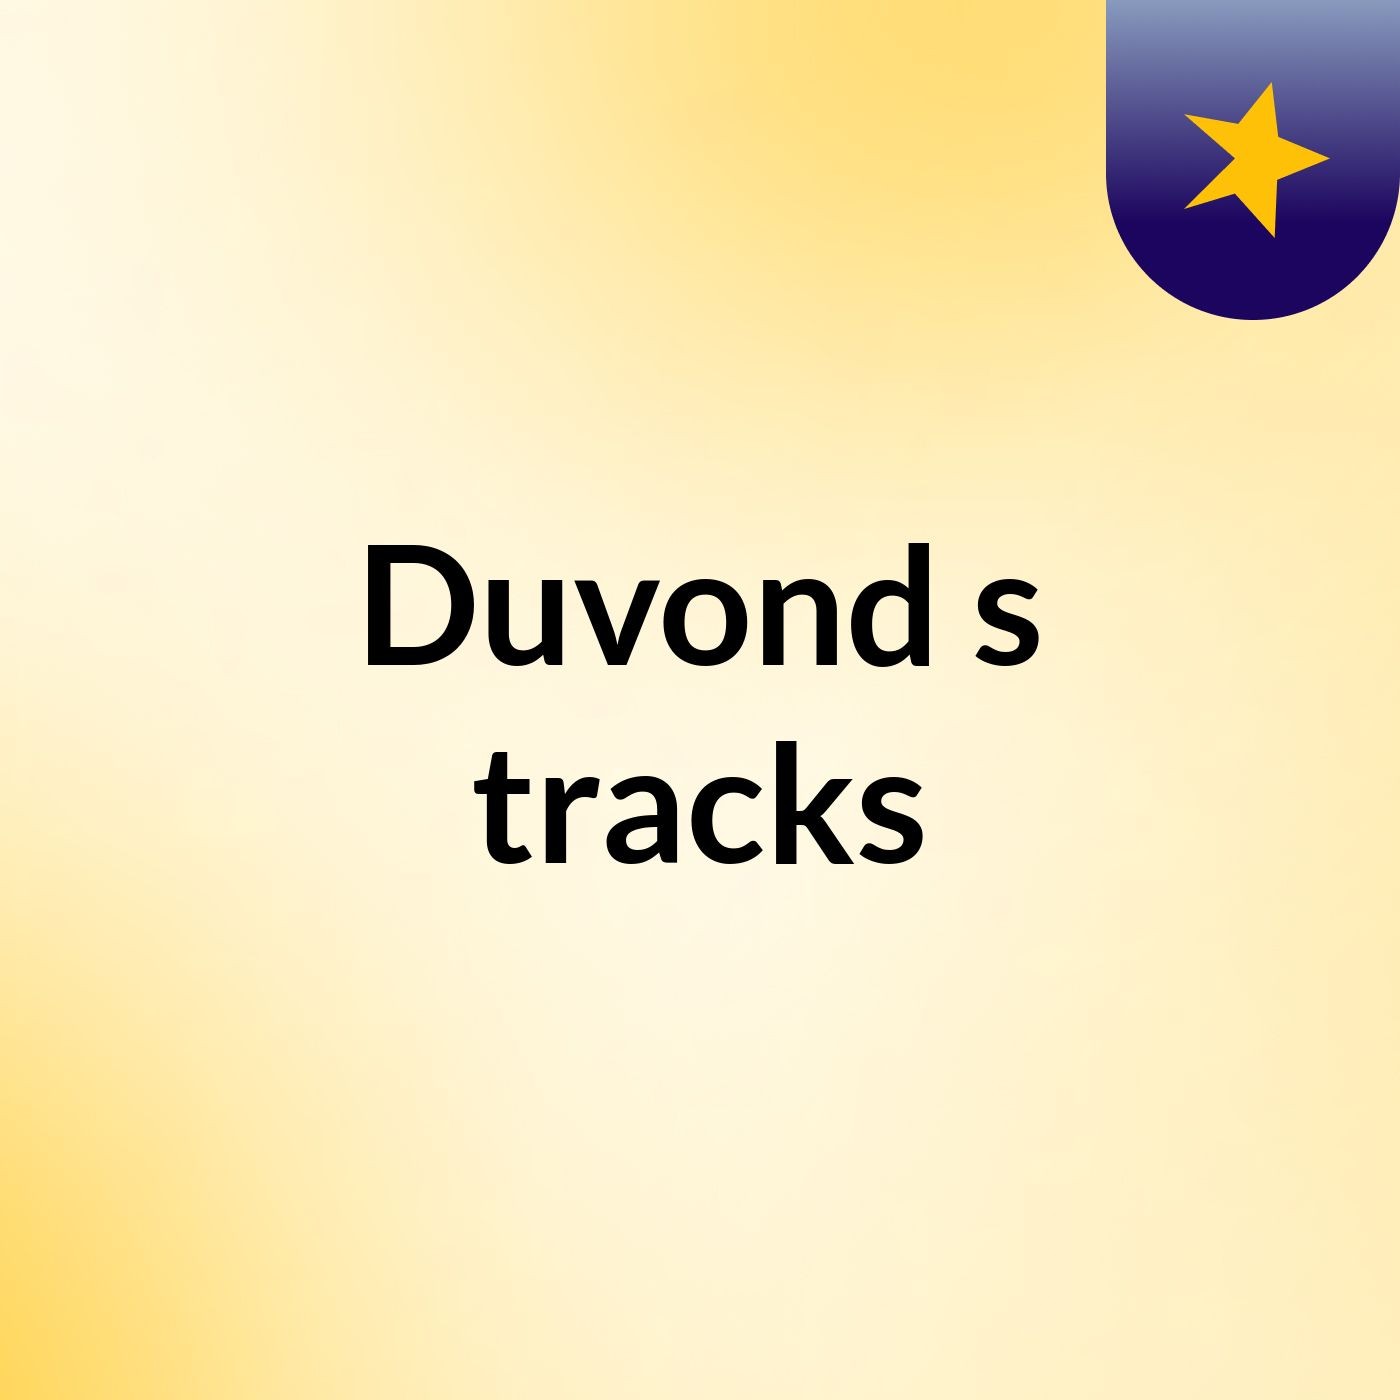 Duvond's tracks